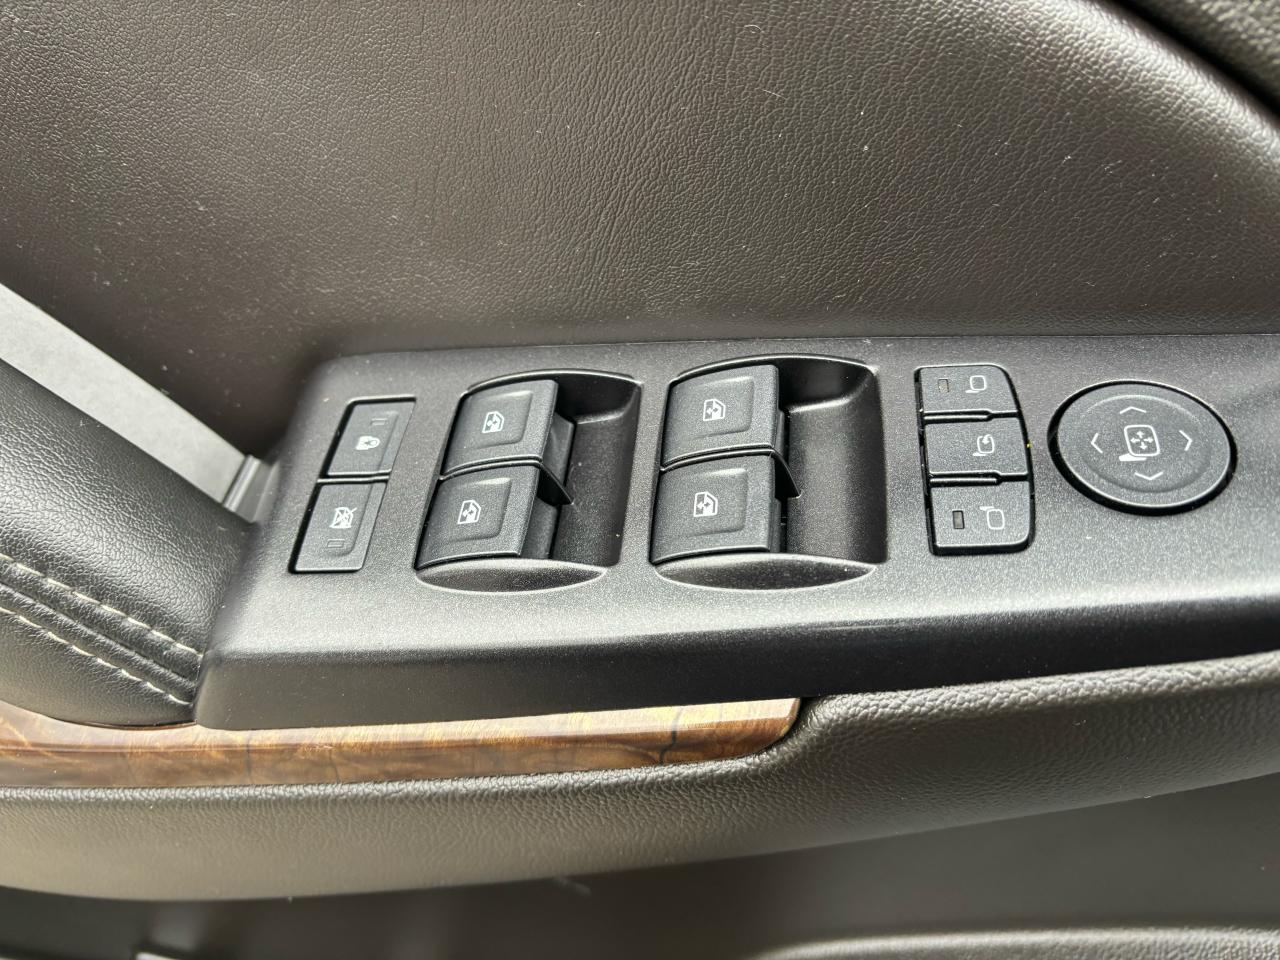 2017 Chevrolet Tahoe LT, Z71, Leather, Sunroof, DVD Player, Navigation - Photo #17